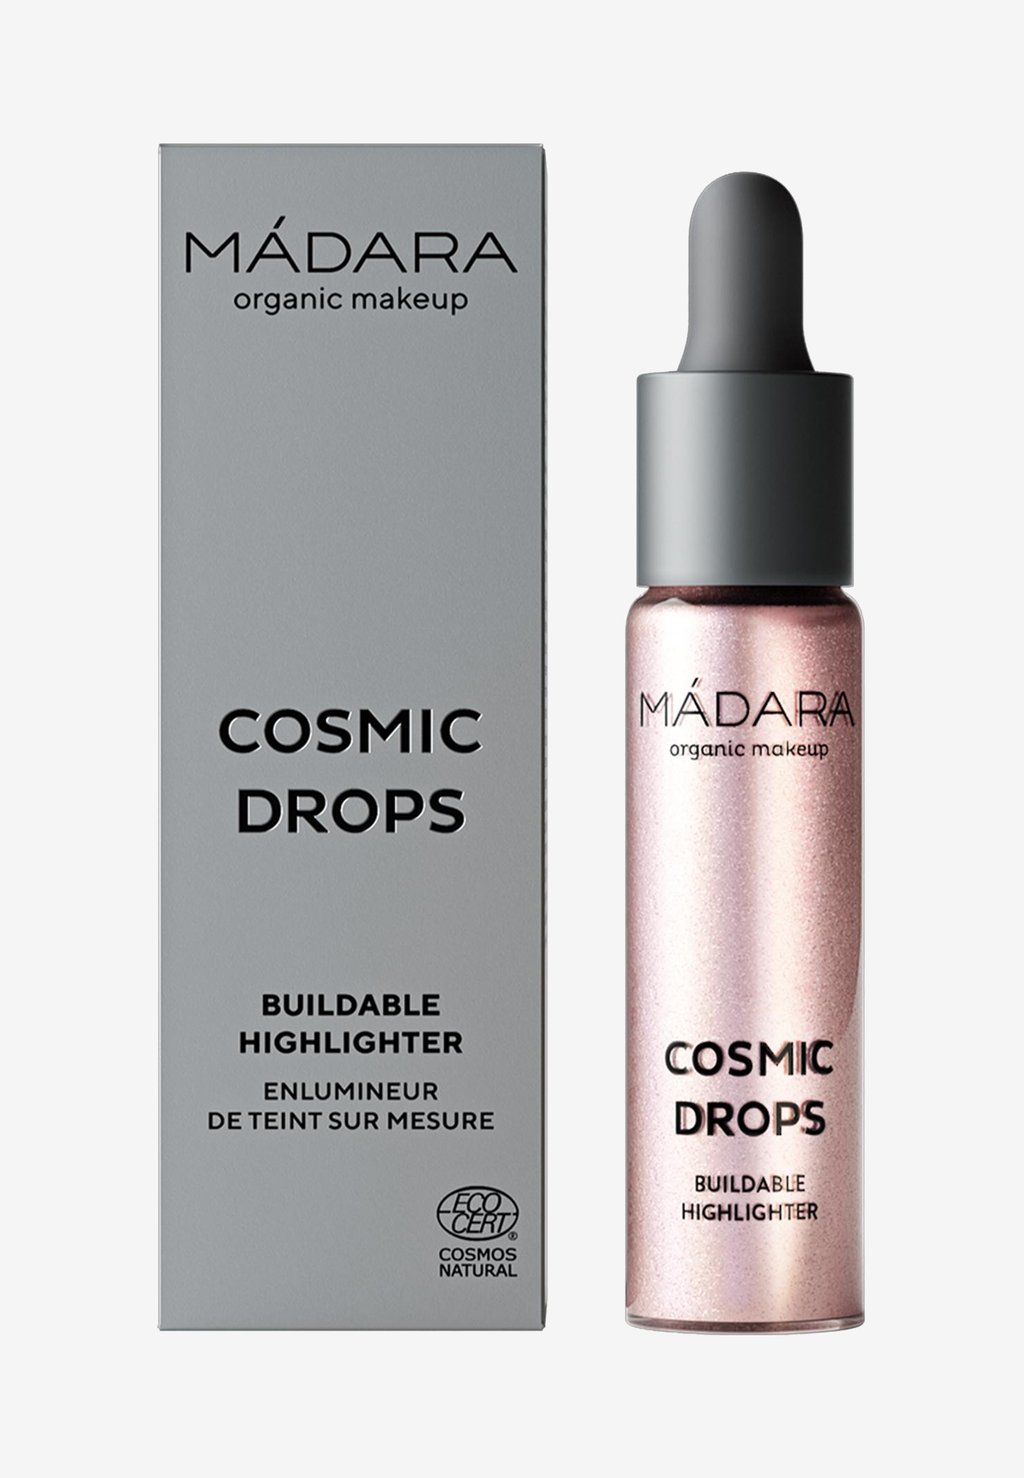 Хайлайтер Cosmic Drops Buildable Highlighter MÁDARA, цвет cosmic rose